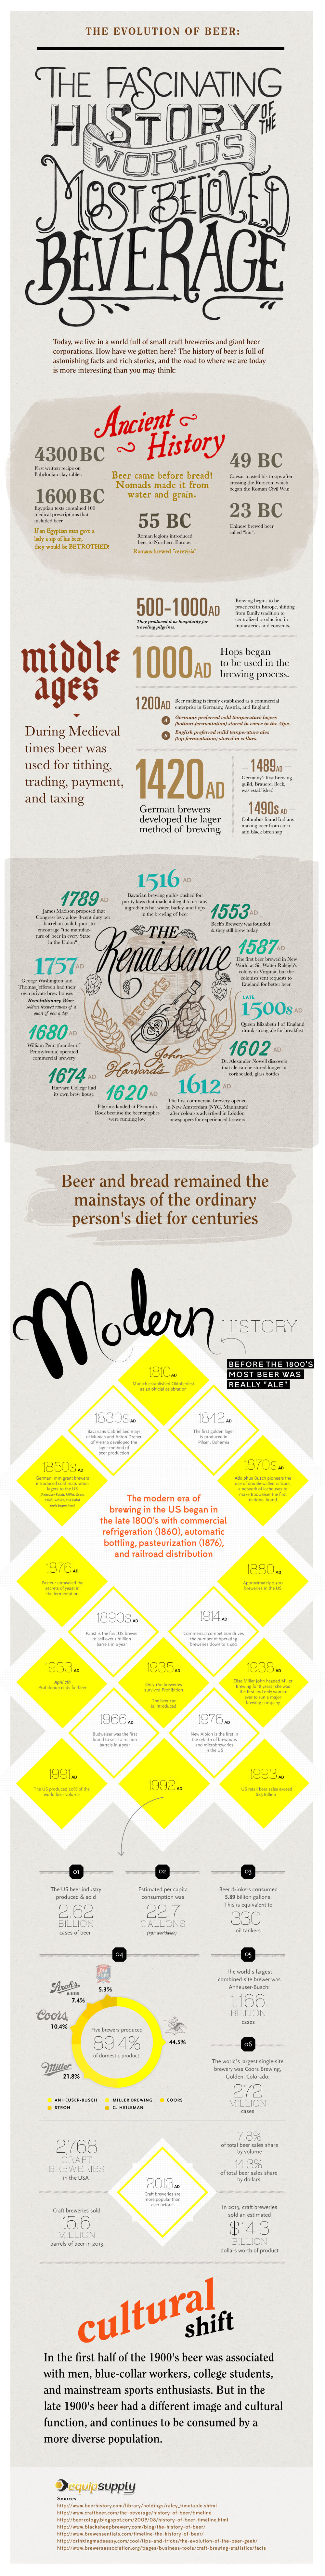 History-of-Beer